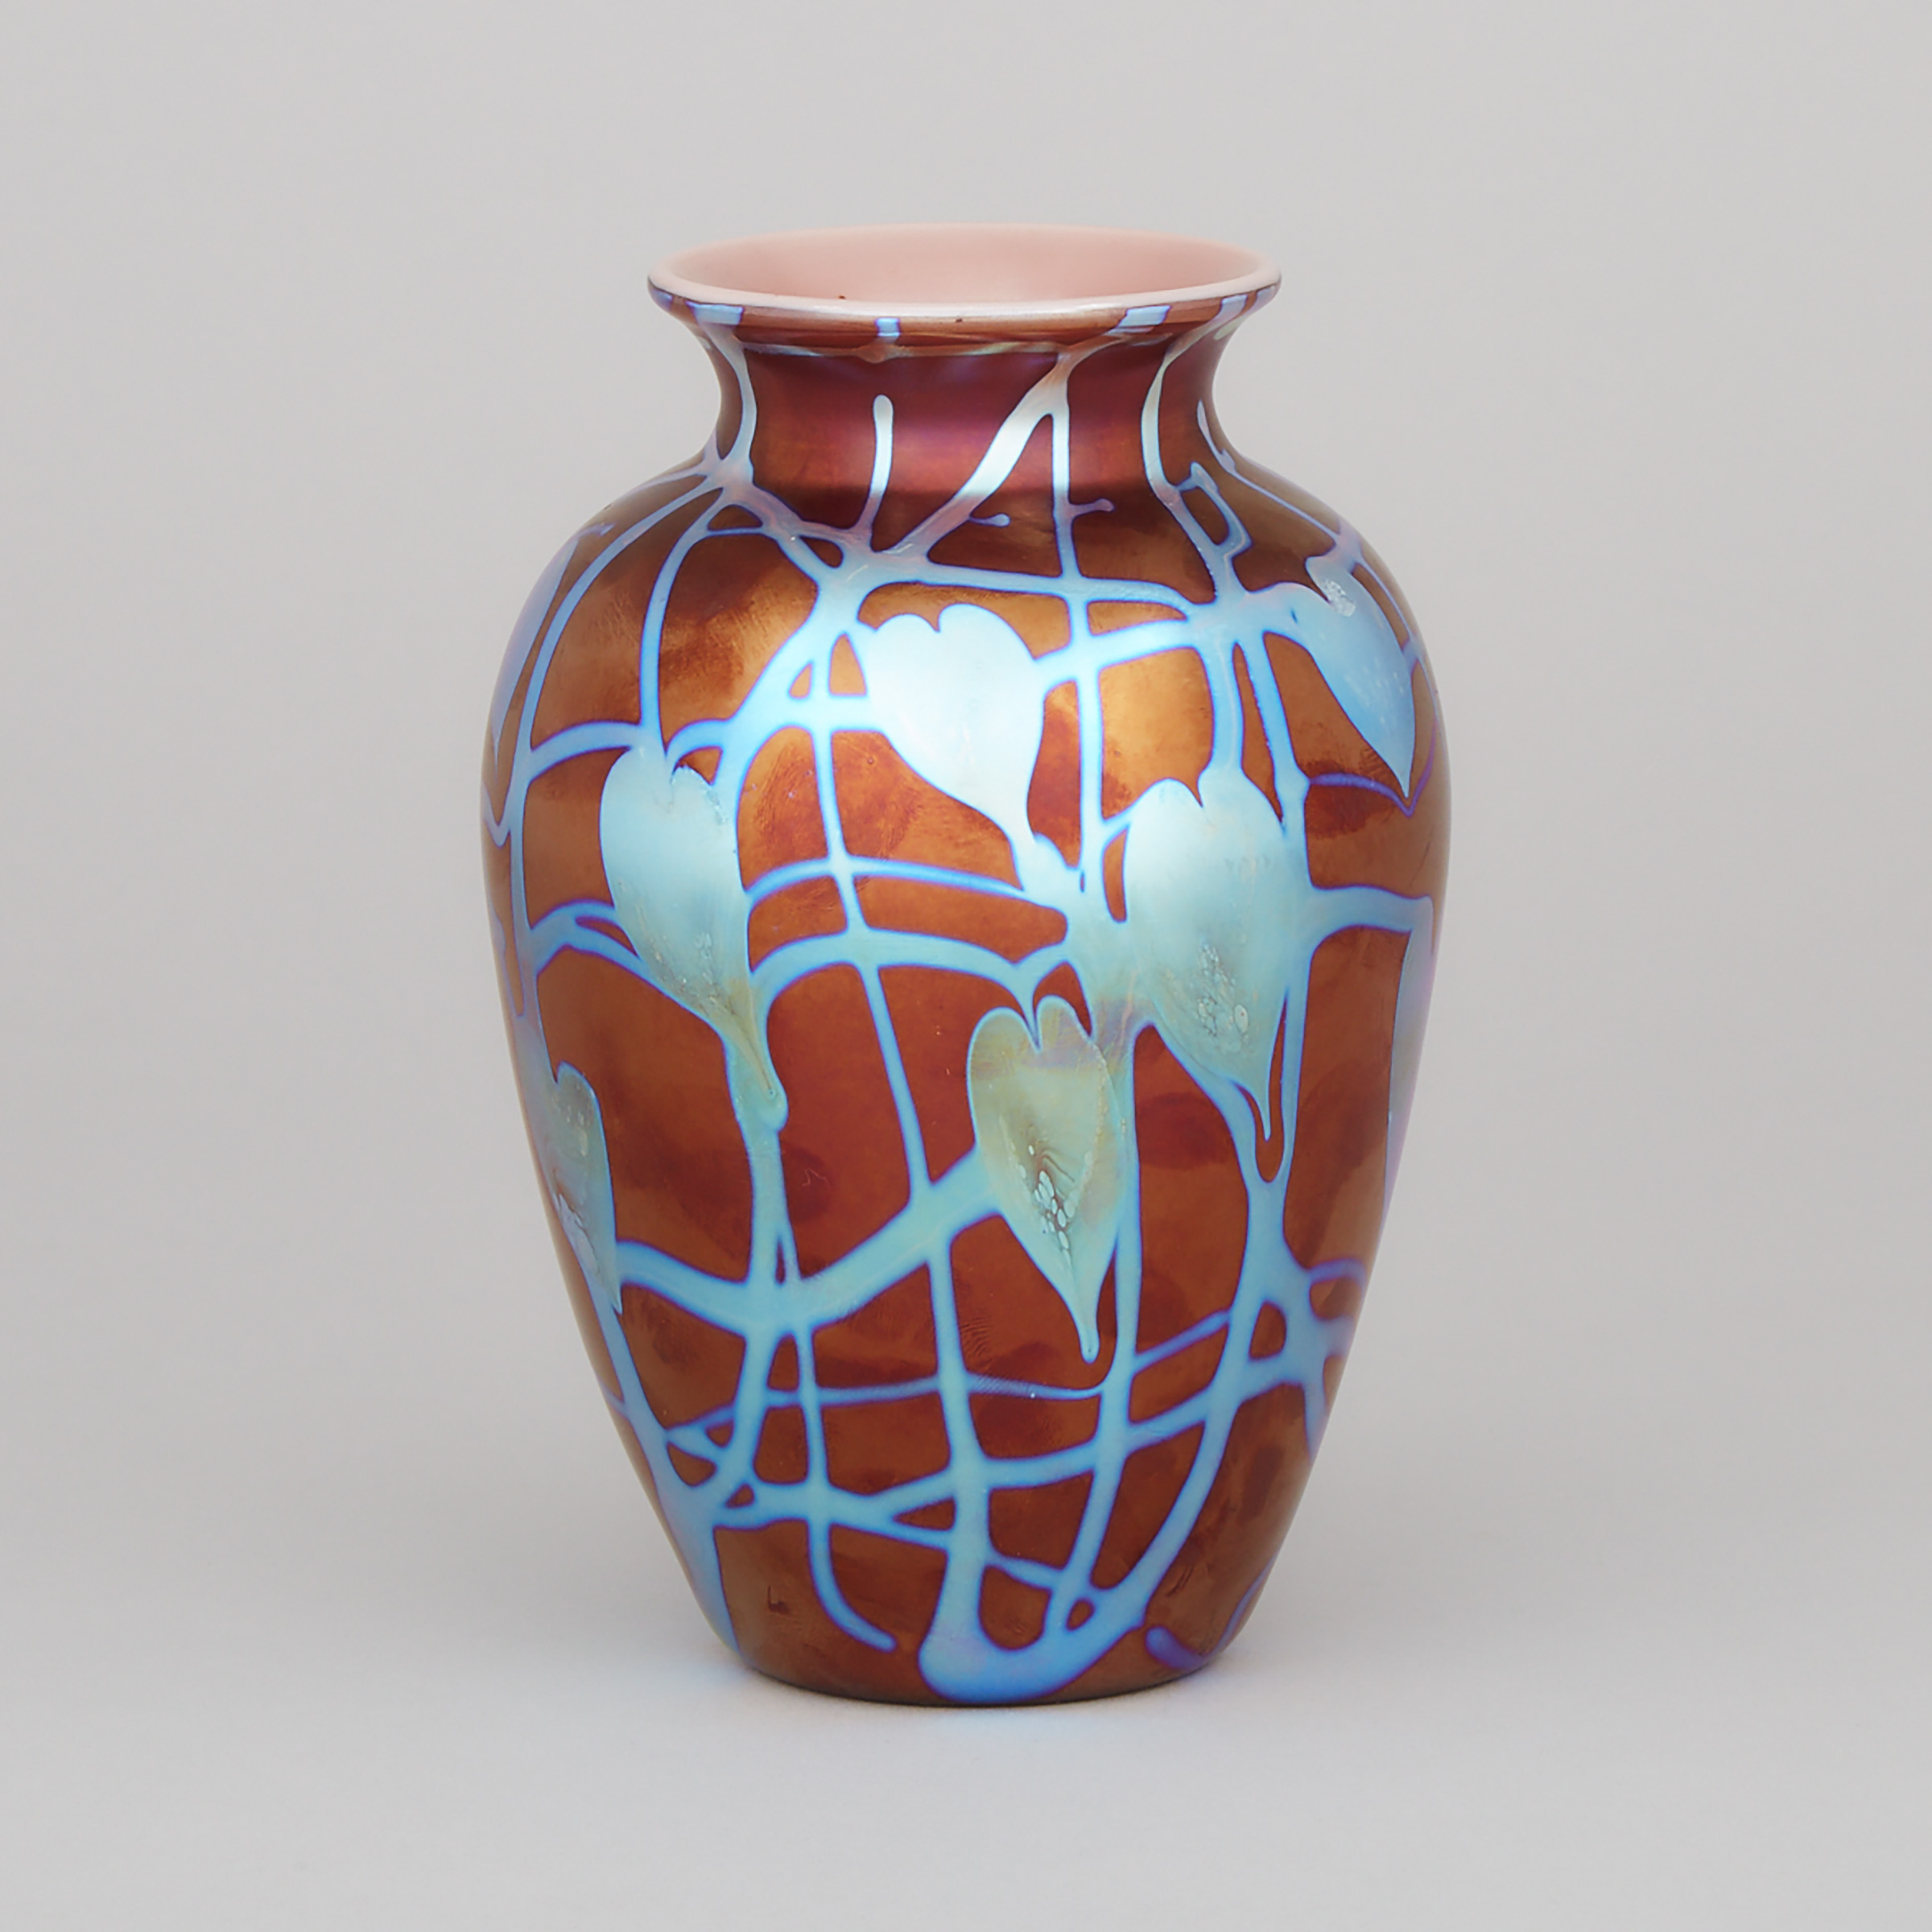 Donald Carlson (American, b.1944), Iridescent Glass Vase, late 20th century